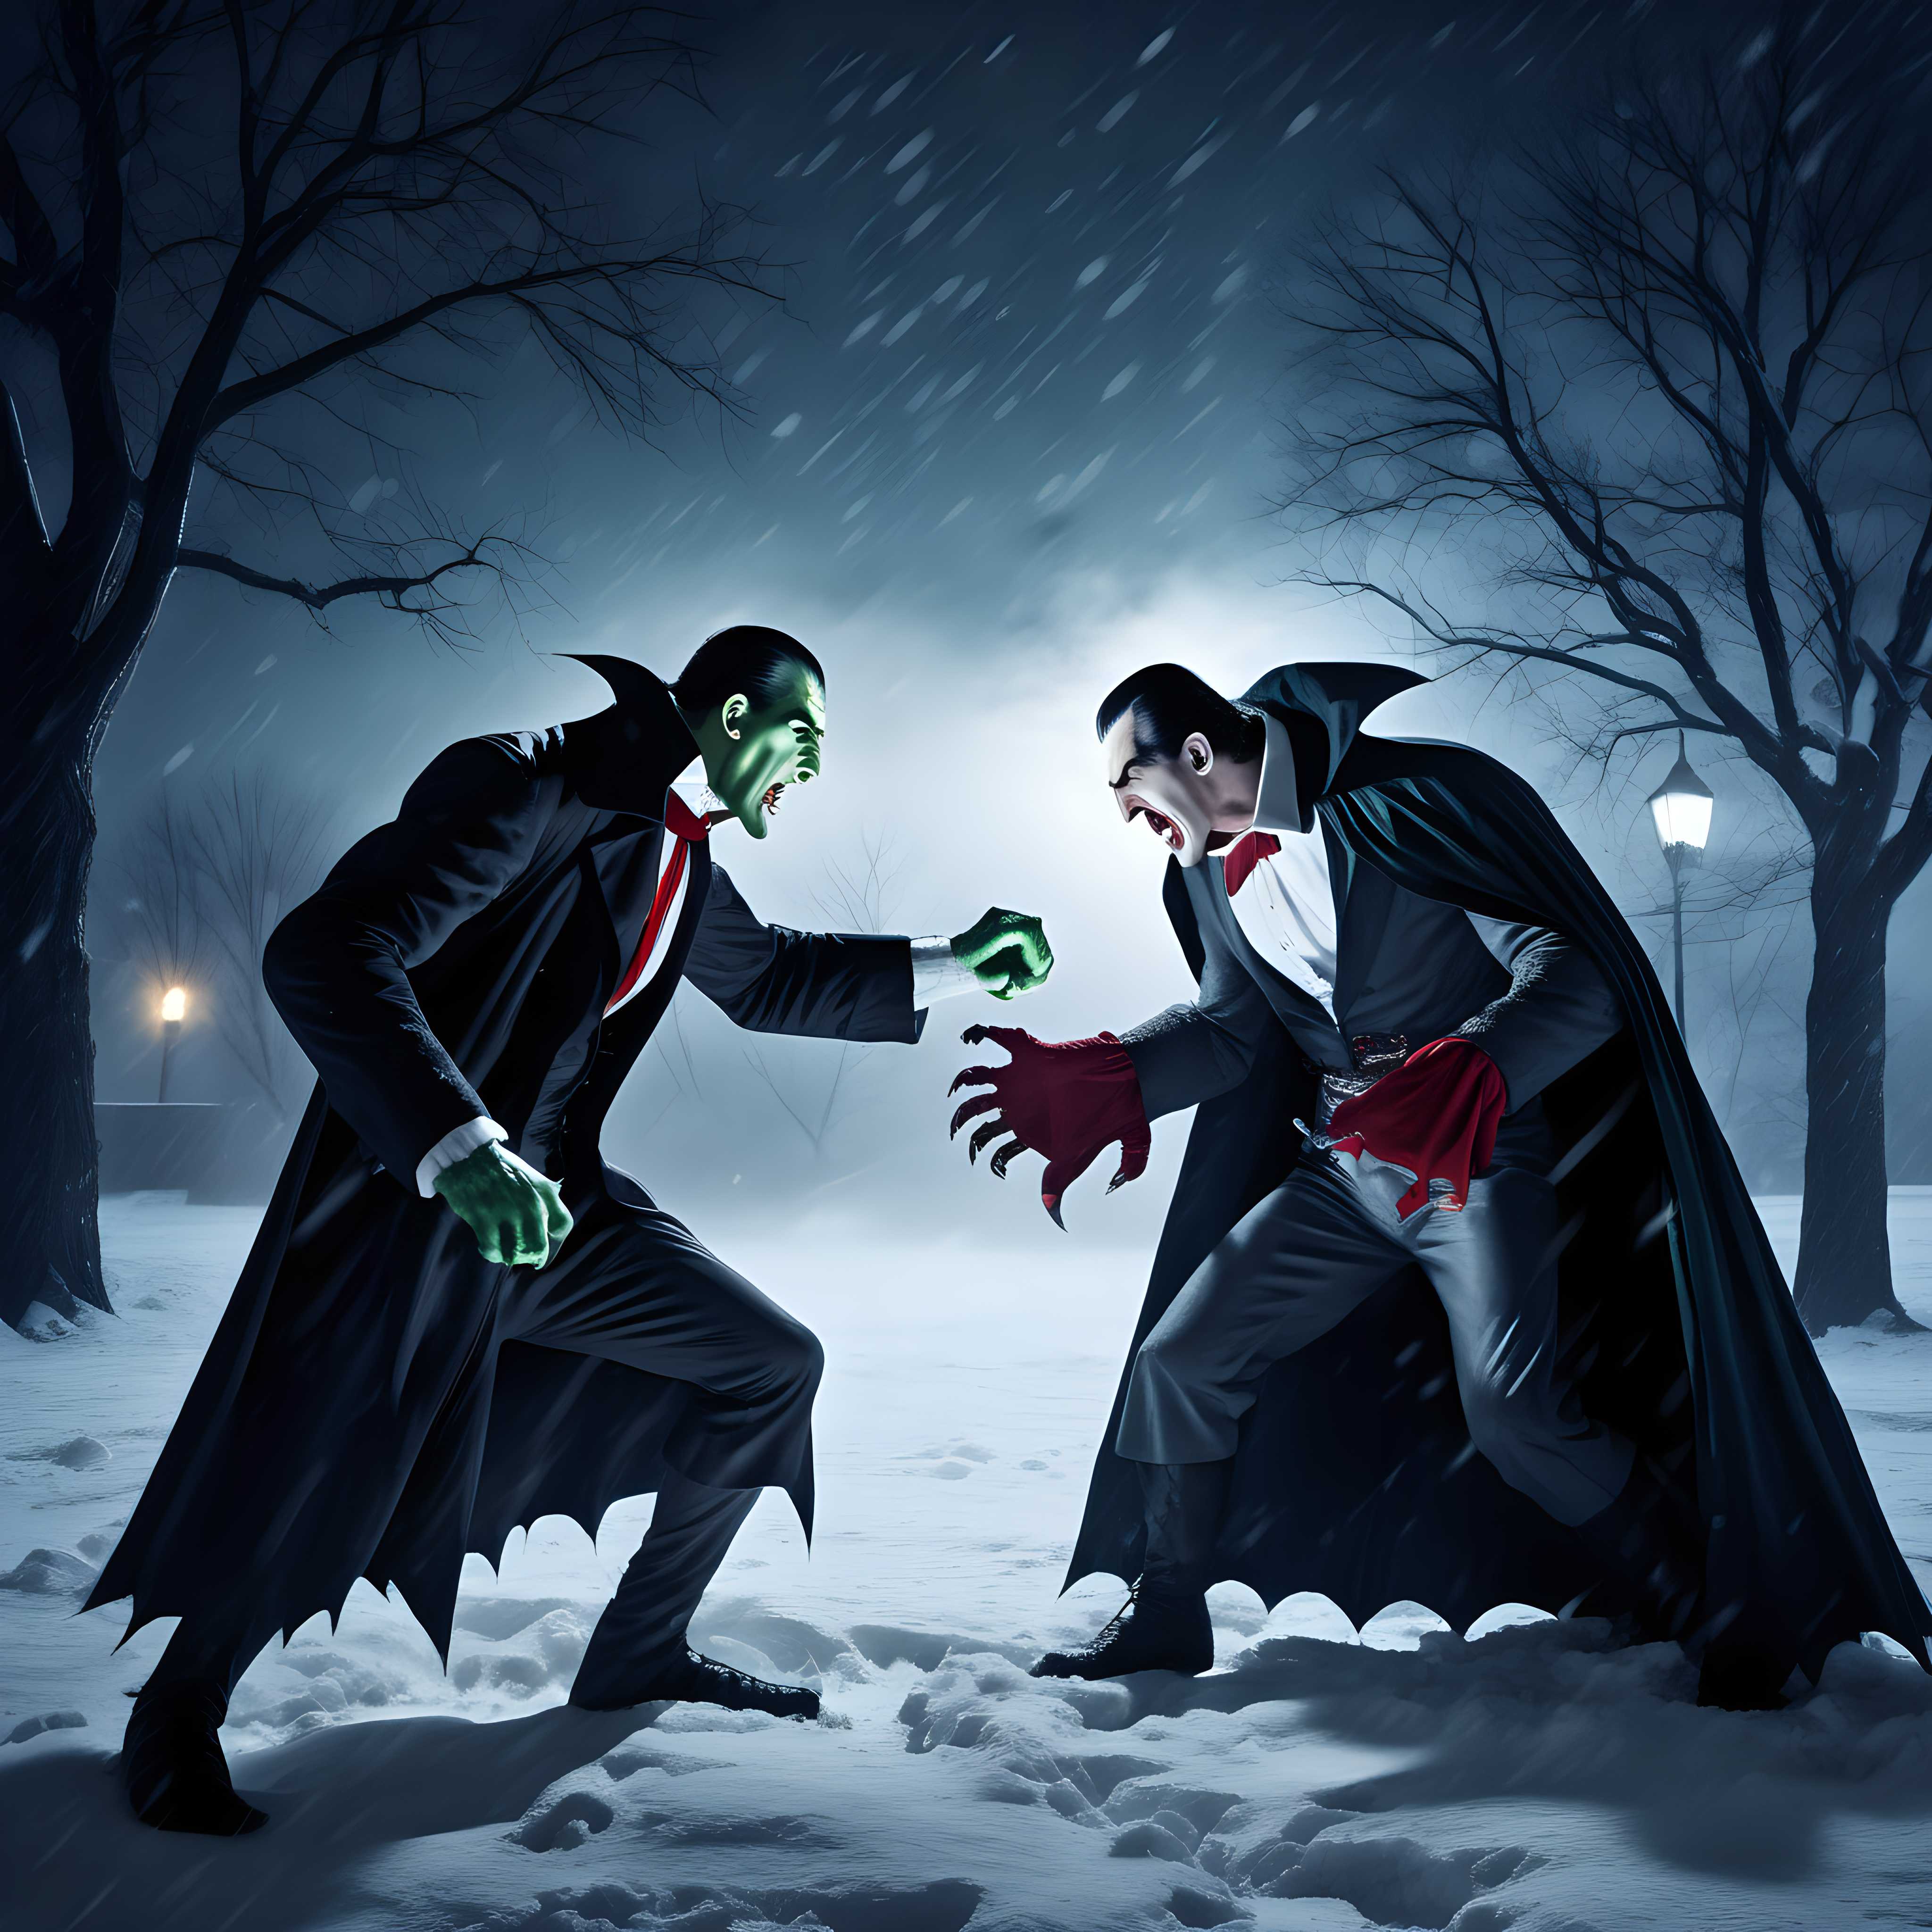 Dracula fighting Frankenstein Monster in winter snow storm at night